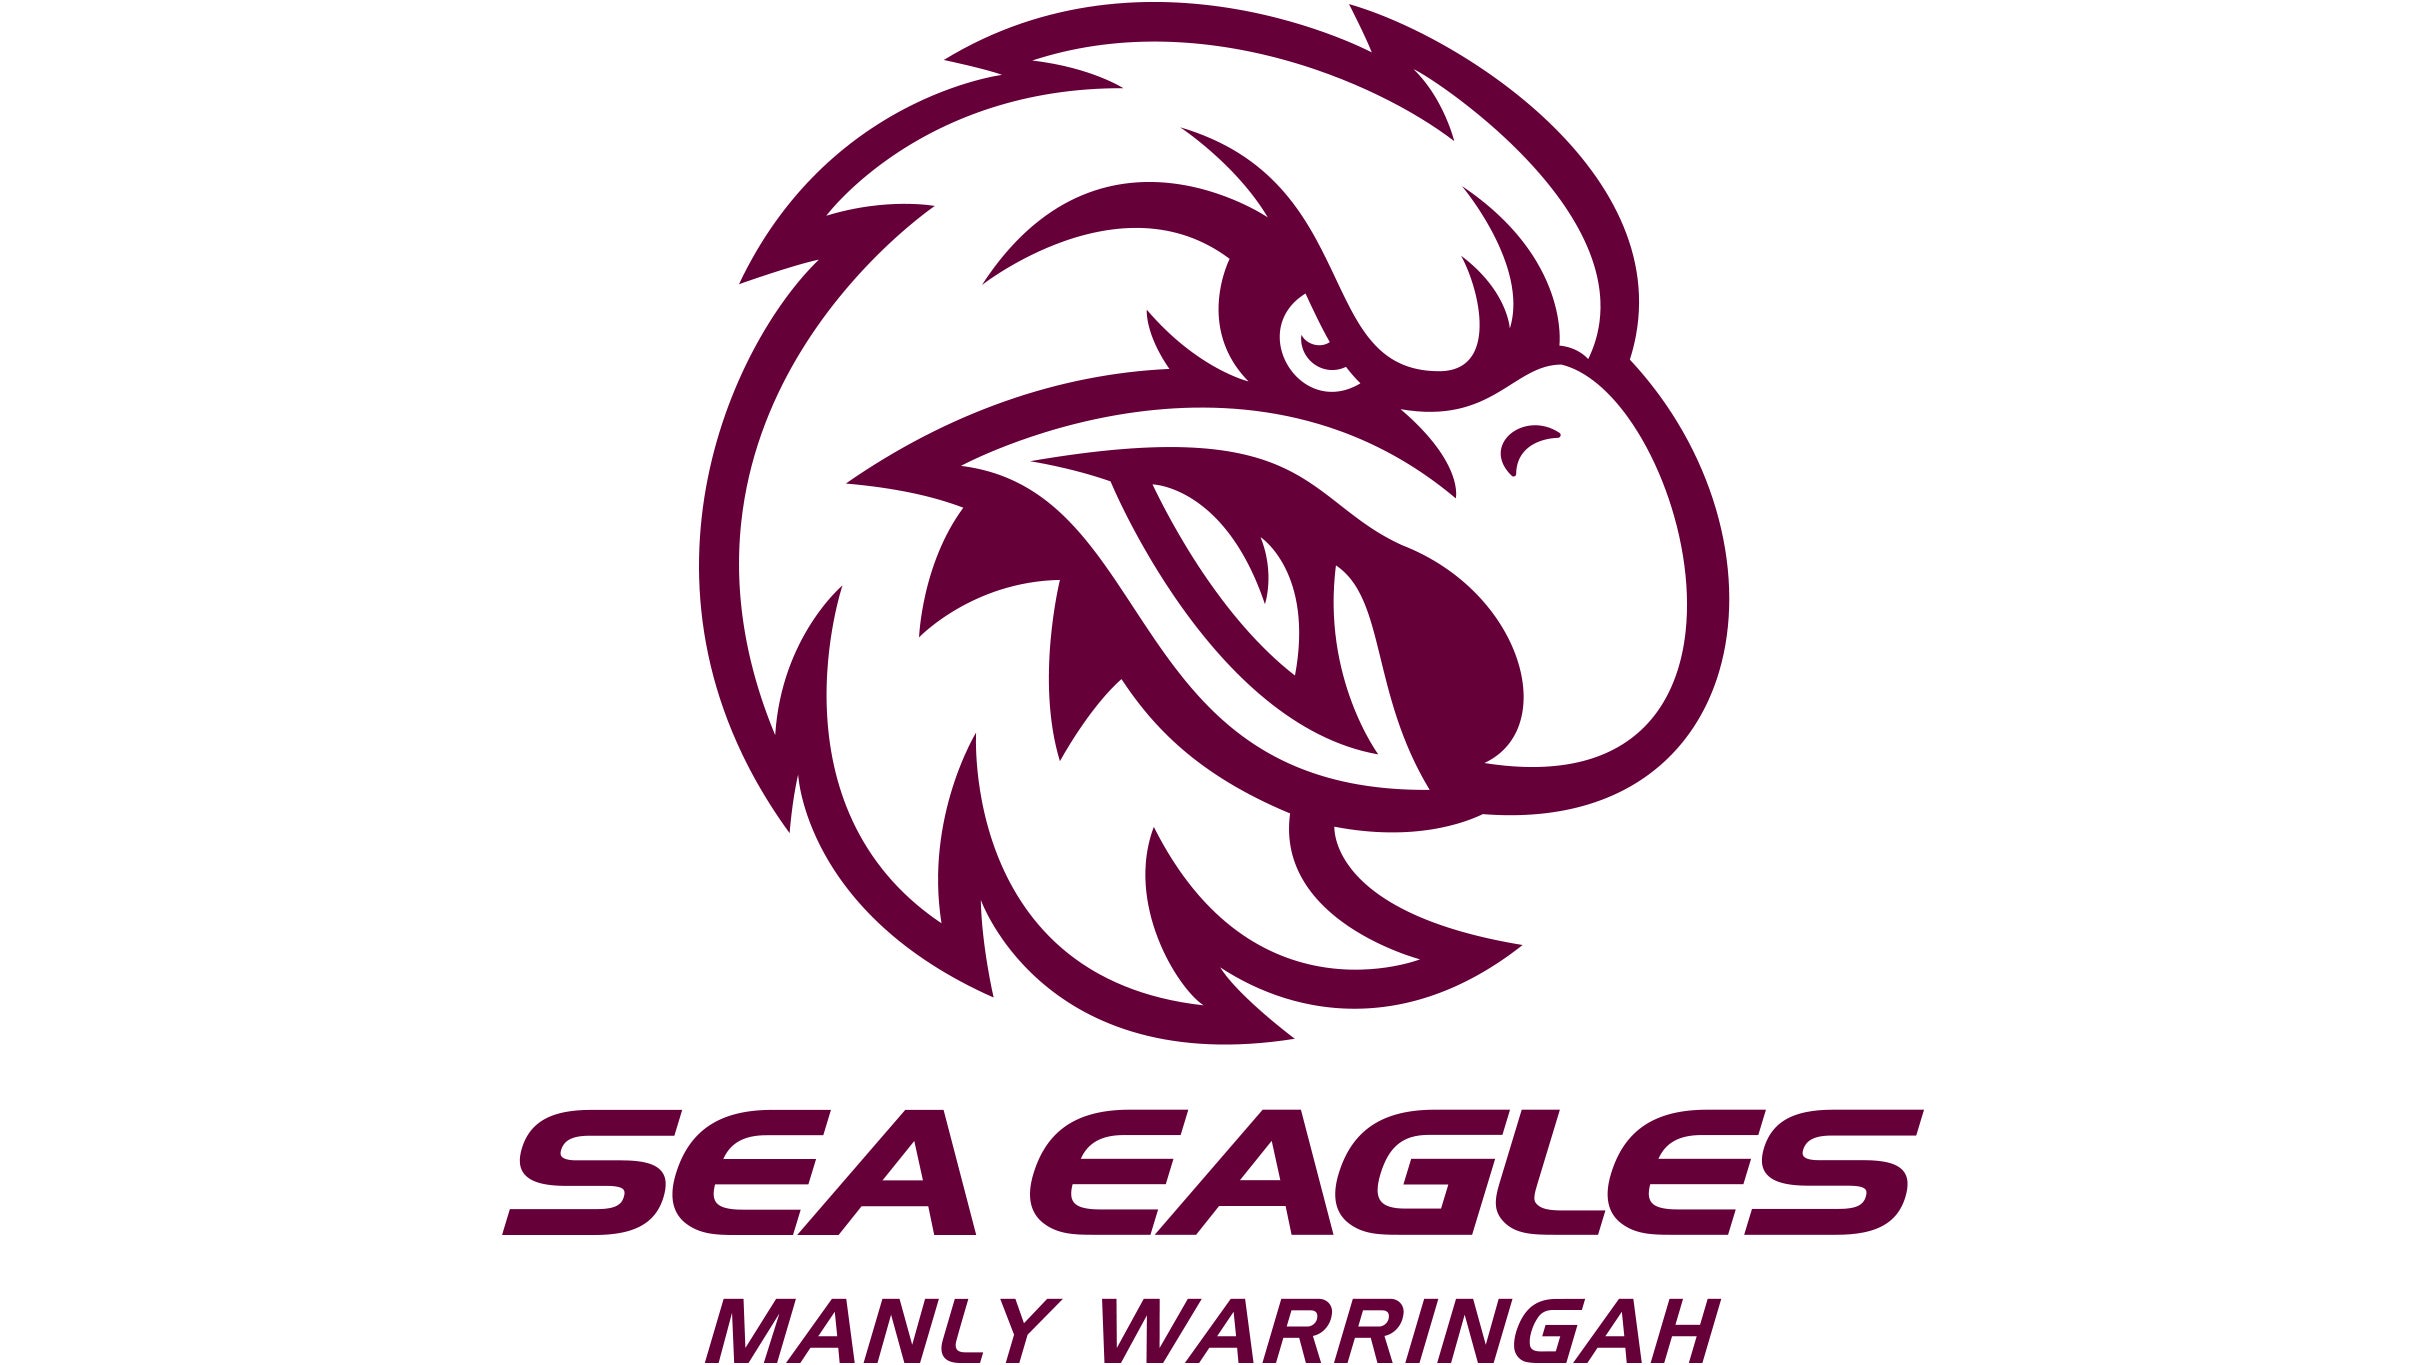 Manly Warringah Sea Eagles v Sharks in Brookvale promo photo for Sea Eagles Members presale offer code